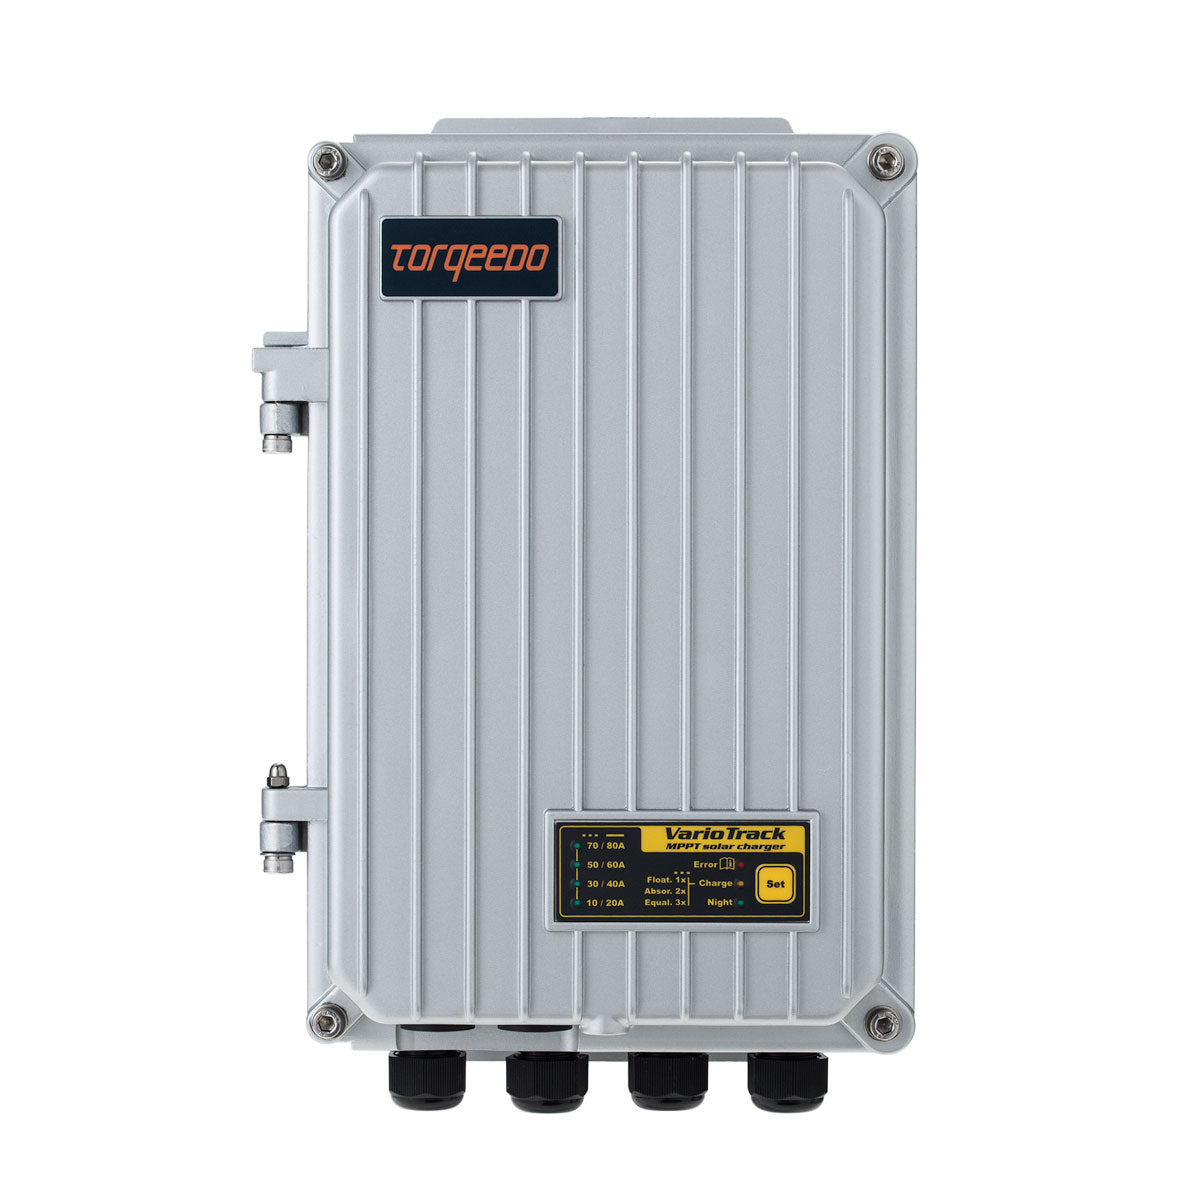 Hurtig solar charge controller Power 24-3500(26-104) 